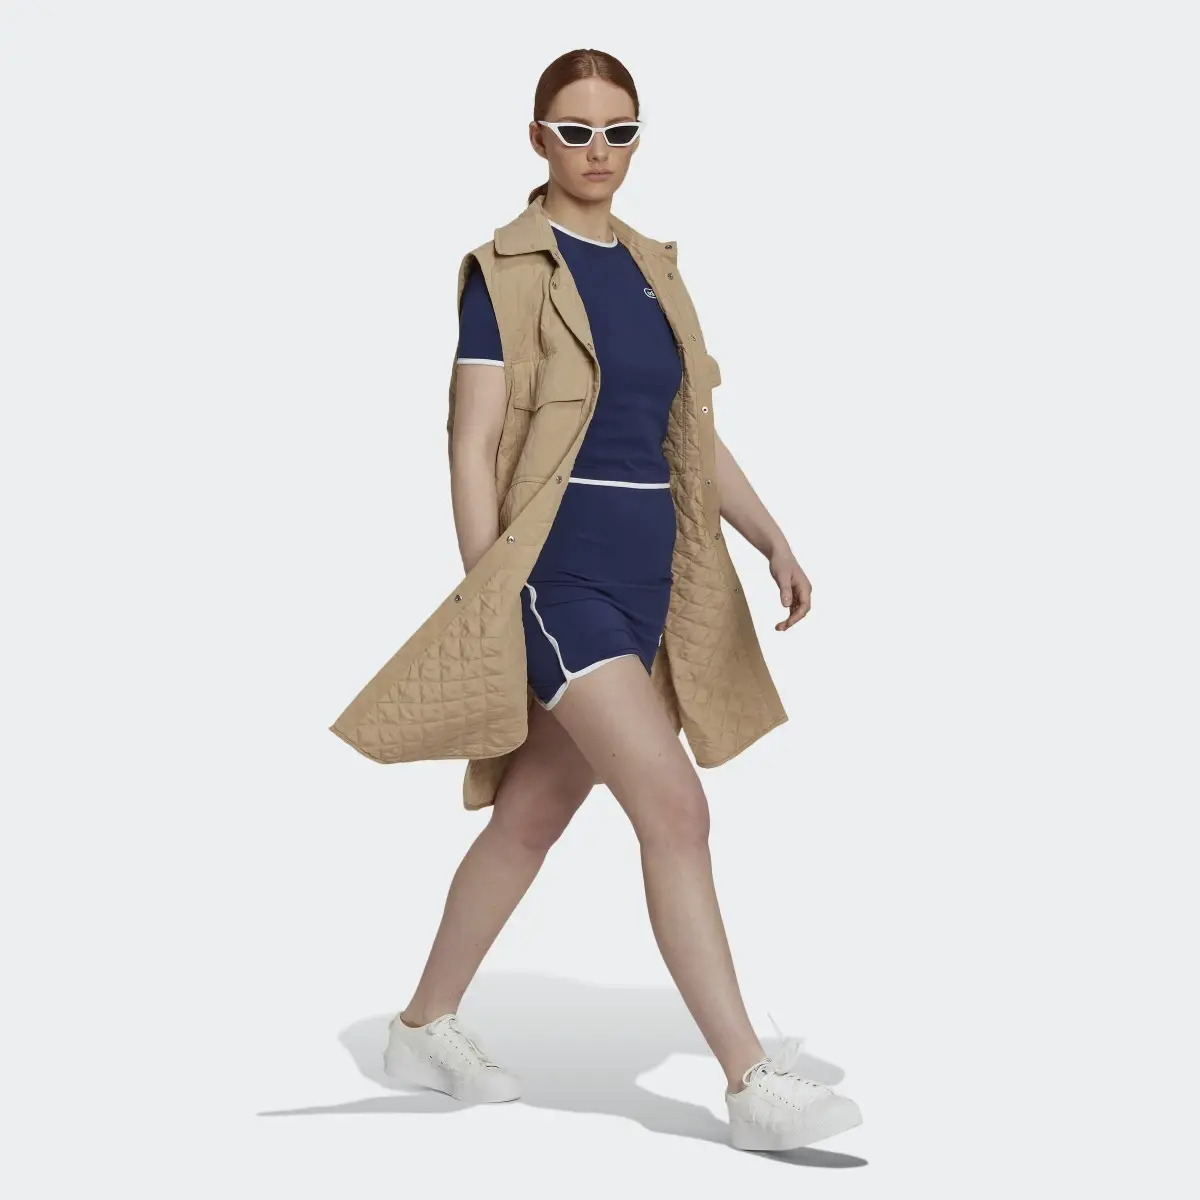 Adidas Mini Skirt with Binding Details. 3